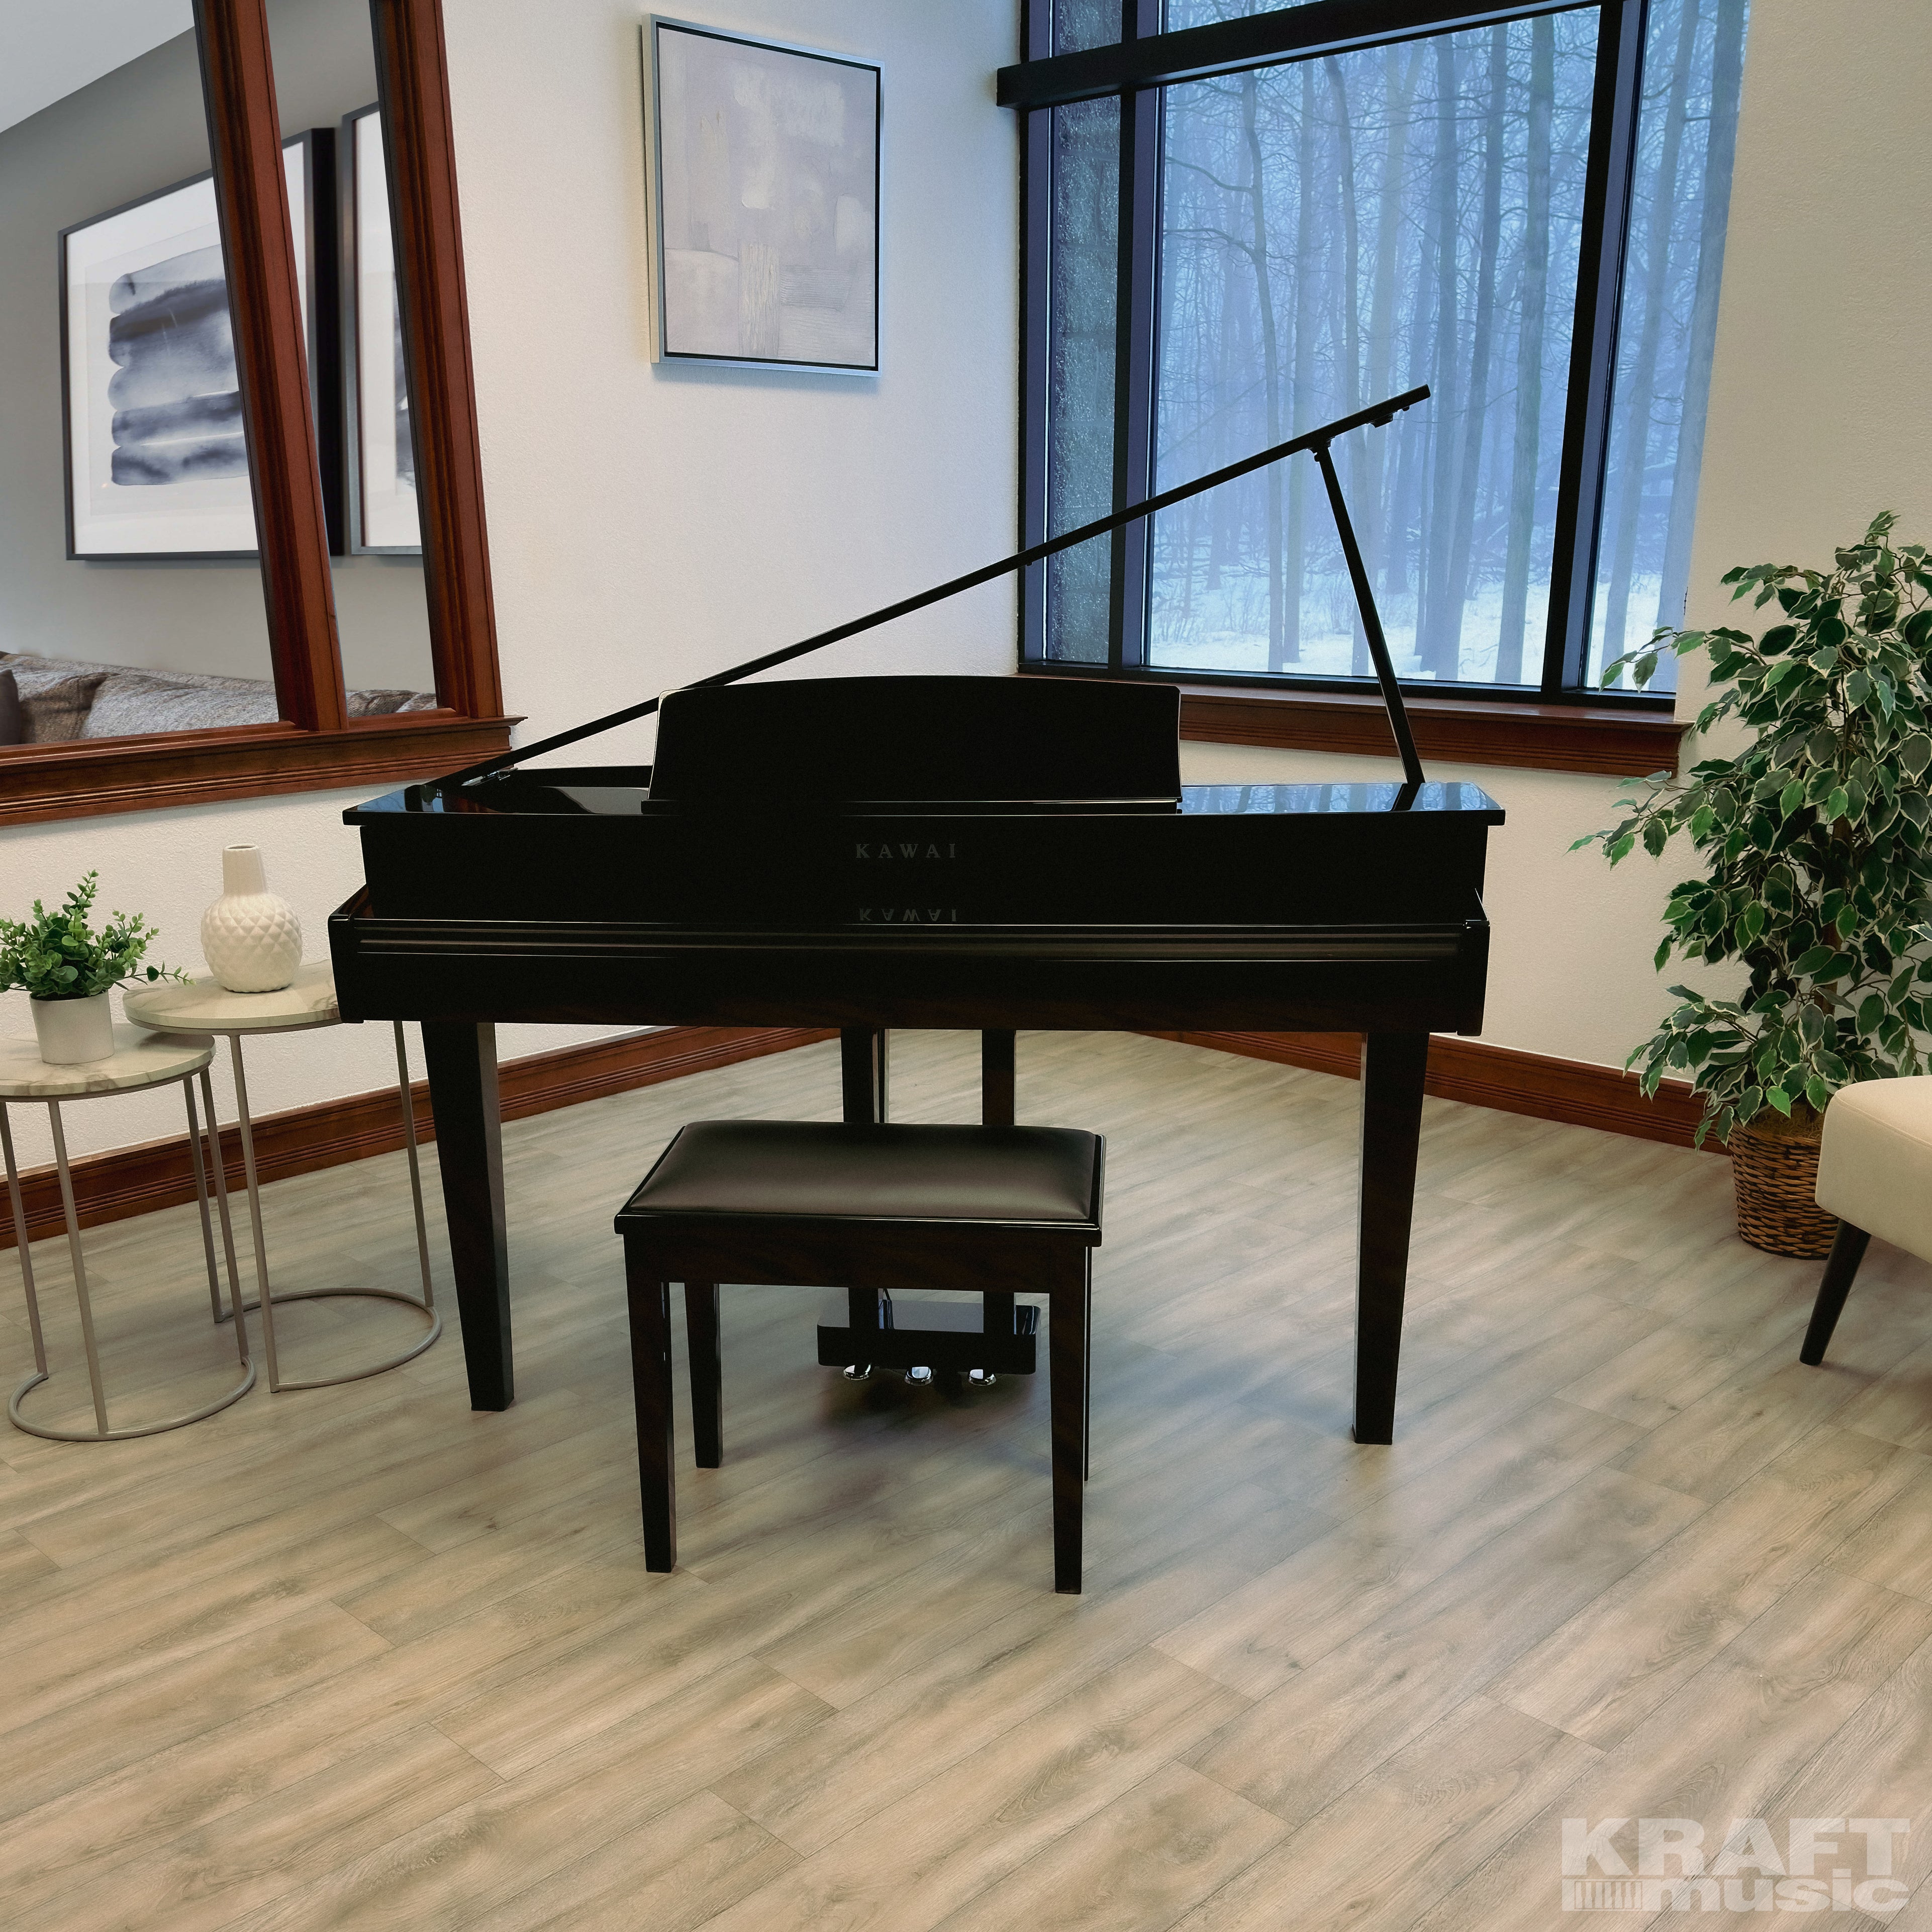 Kawai DG30 Digital Grand Piano - Ebony Polish - in a stylish music room with the key cover closed